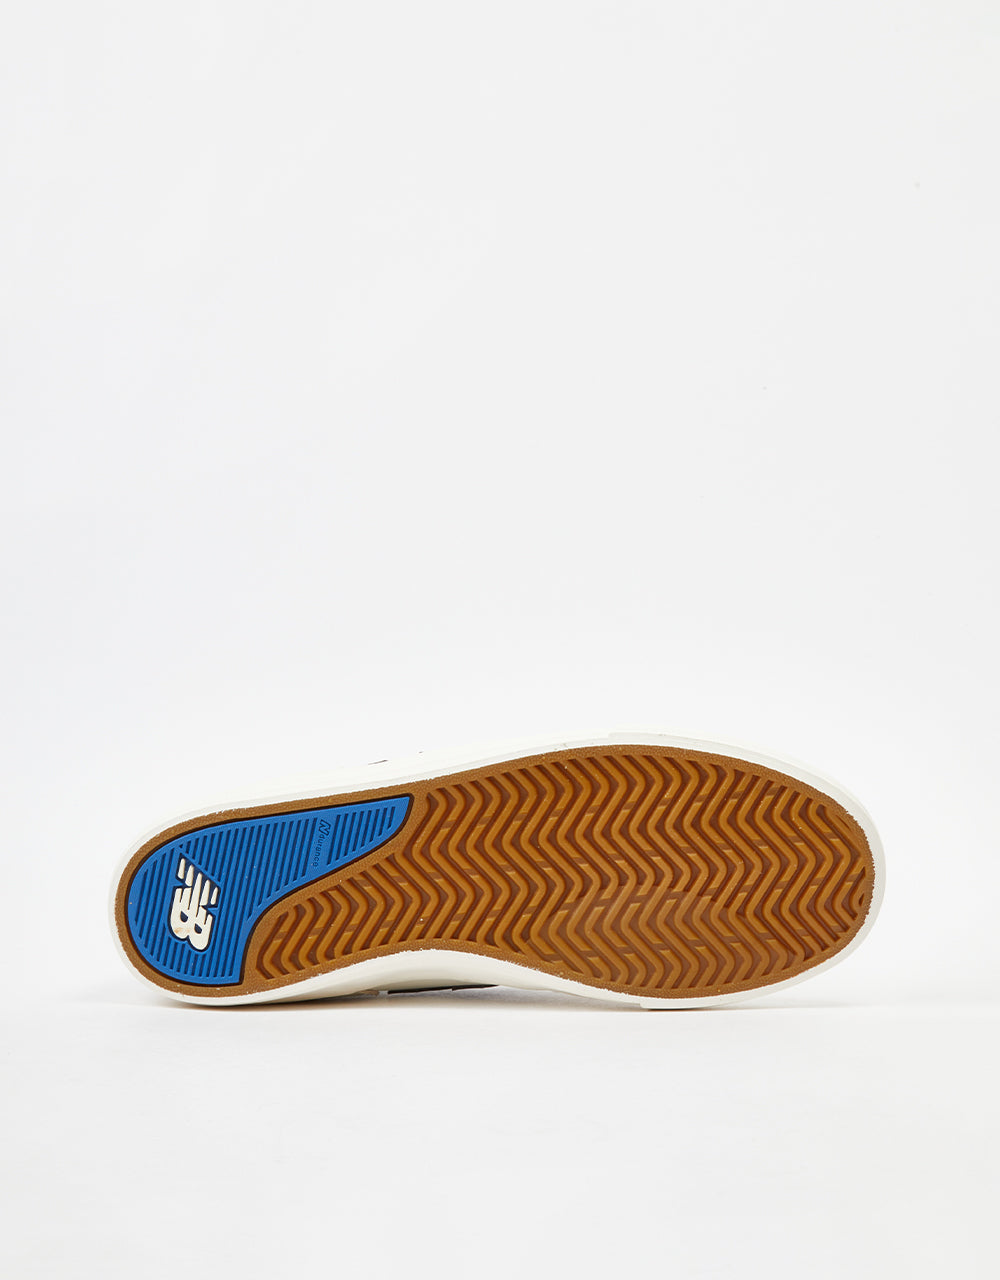 New Balance Numeric Jamie Foy 306 Skate Shoes - Sea Salt/Blue